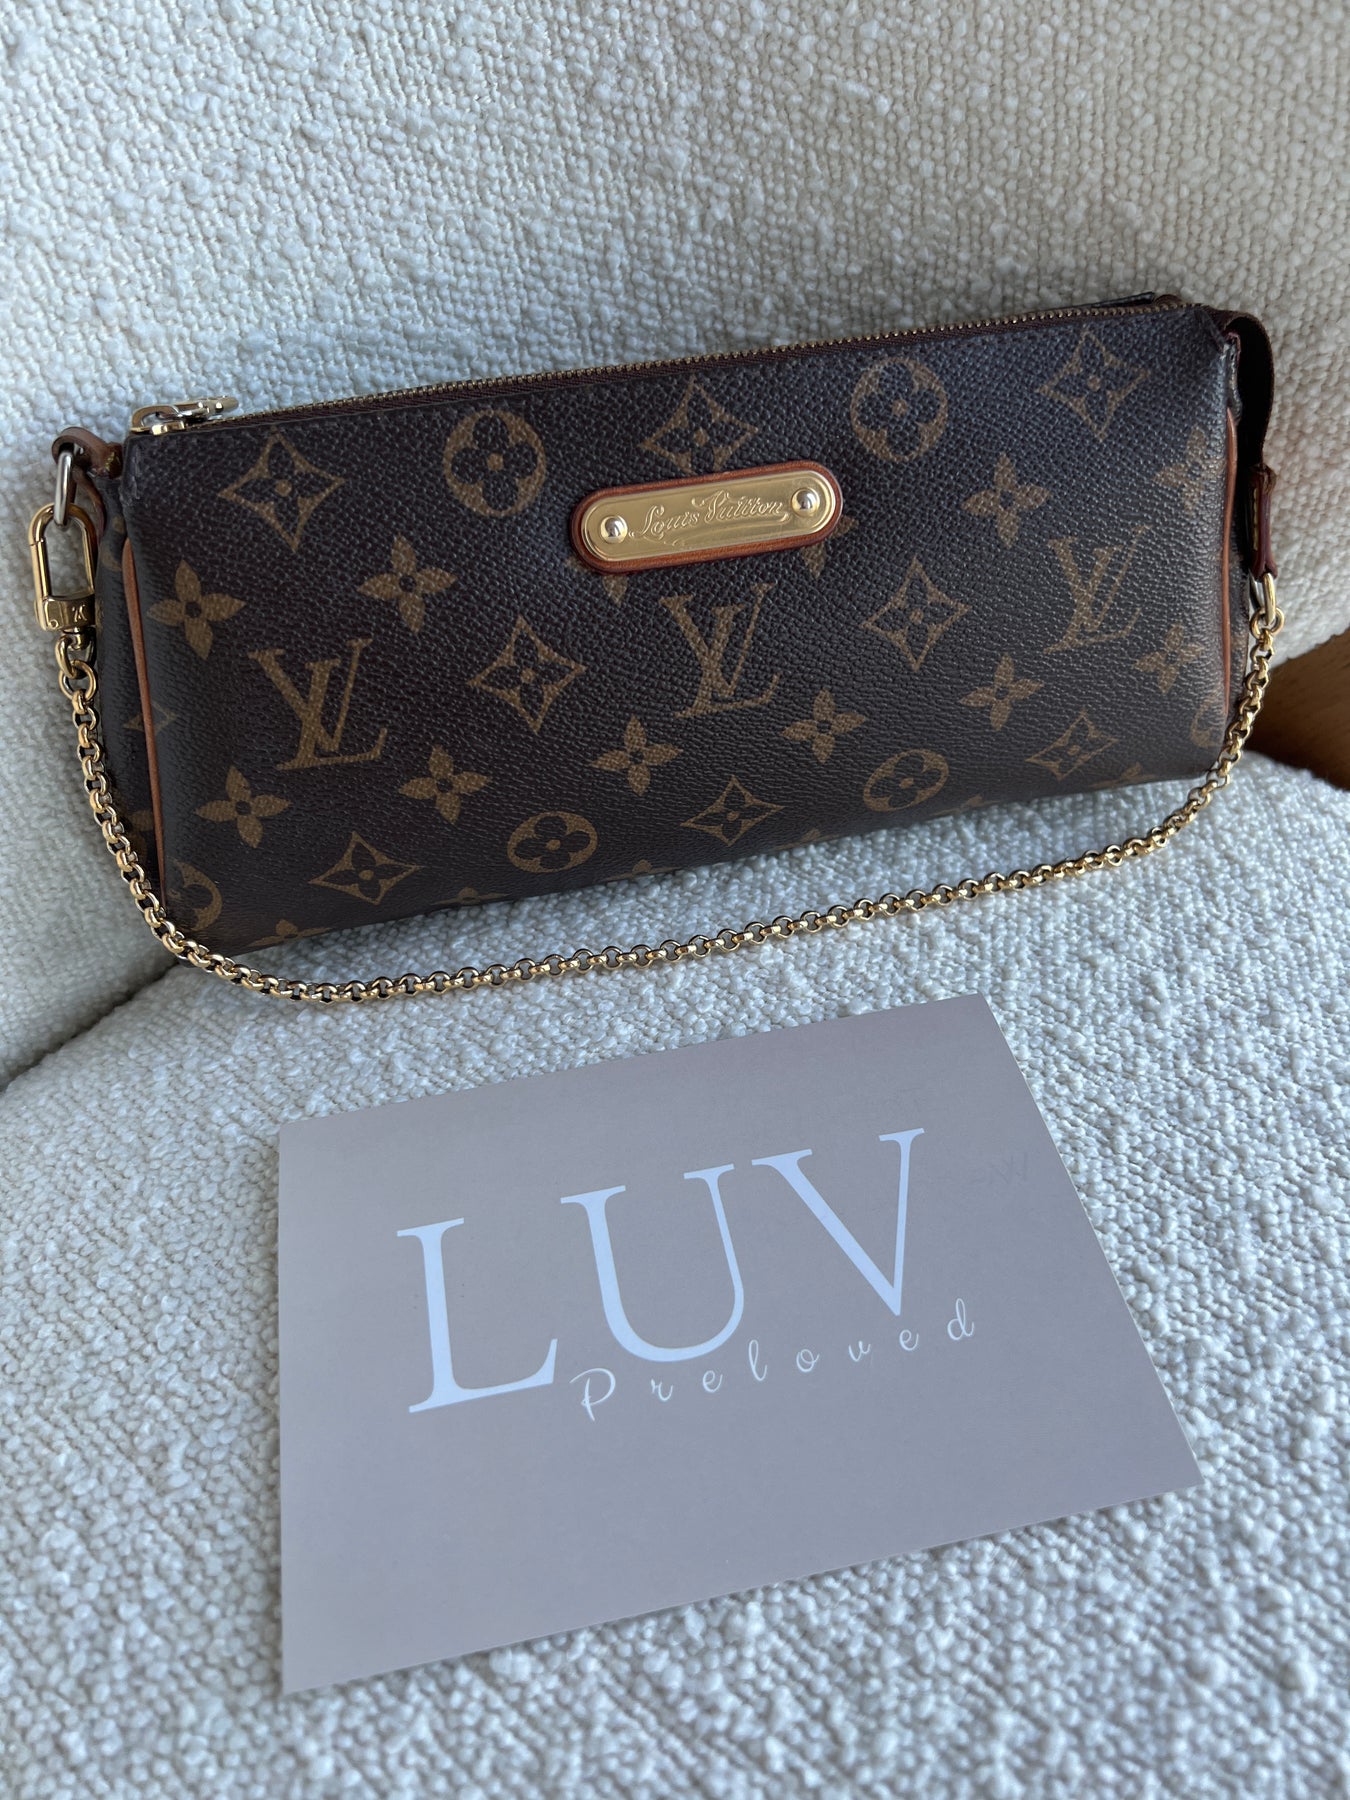 Louis Vuitton Monogram Eva 🛒Not available on webstore - DM us to